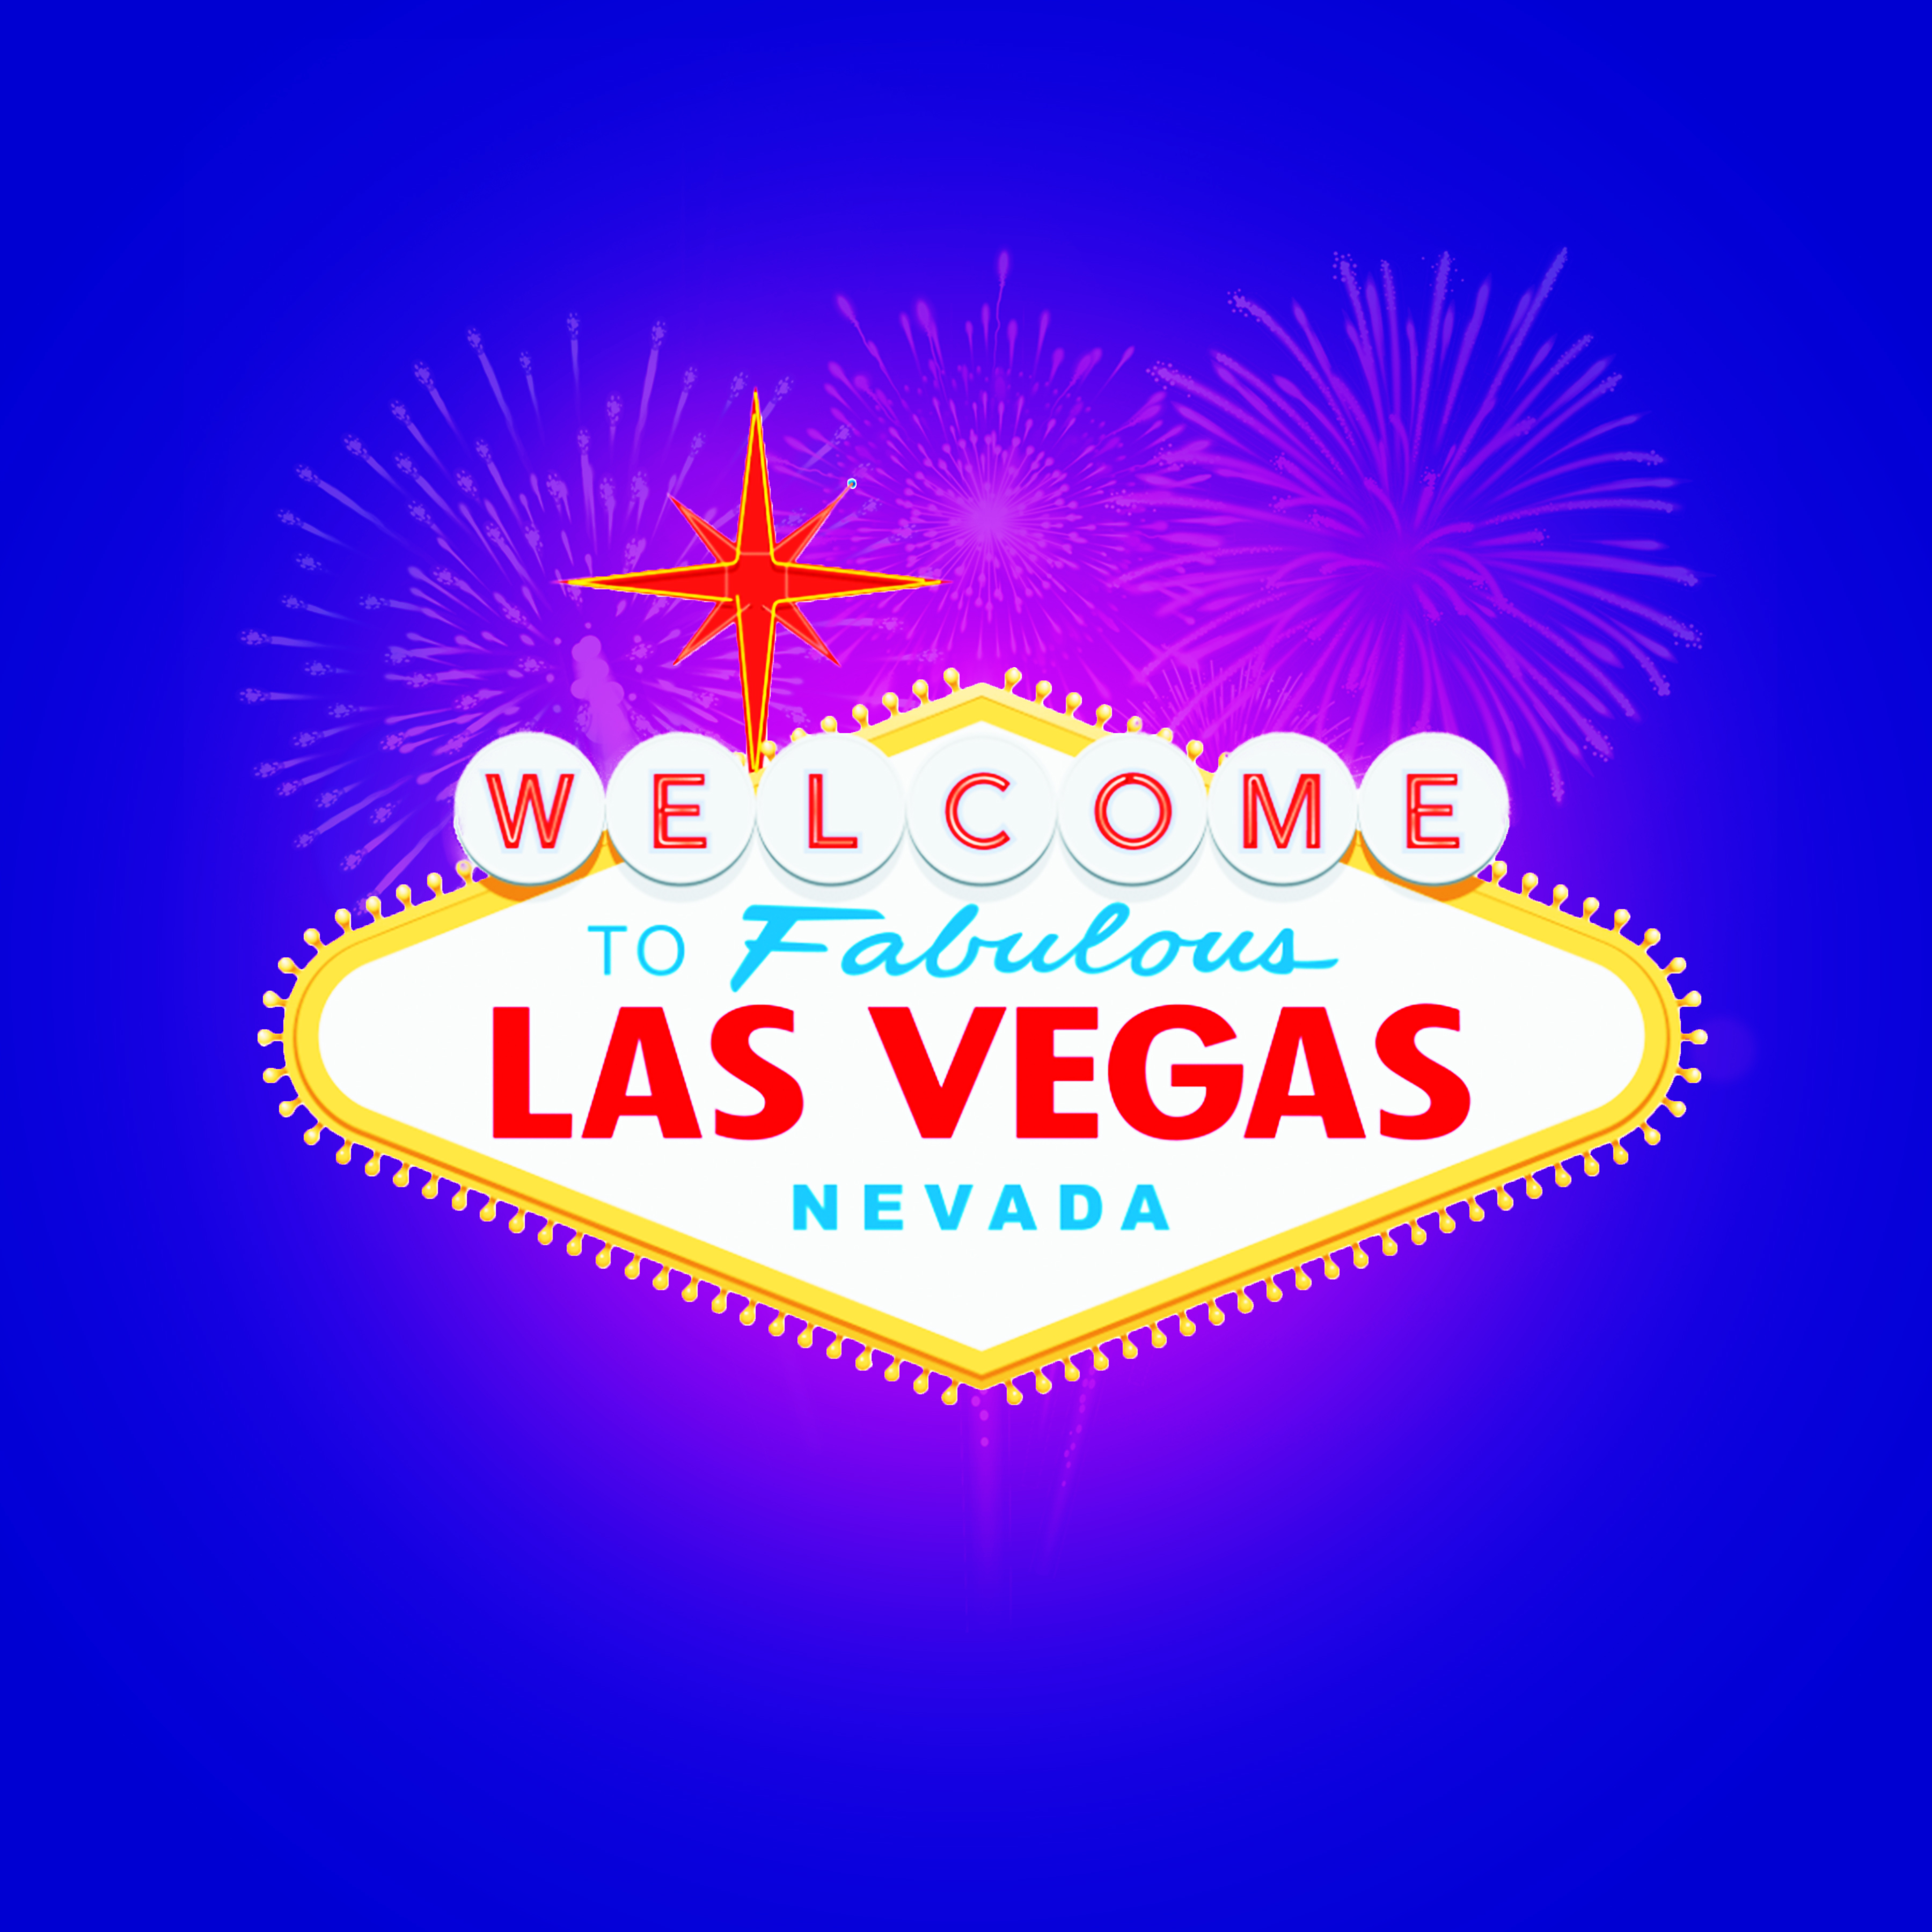 Las Vegas online guide